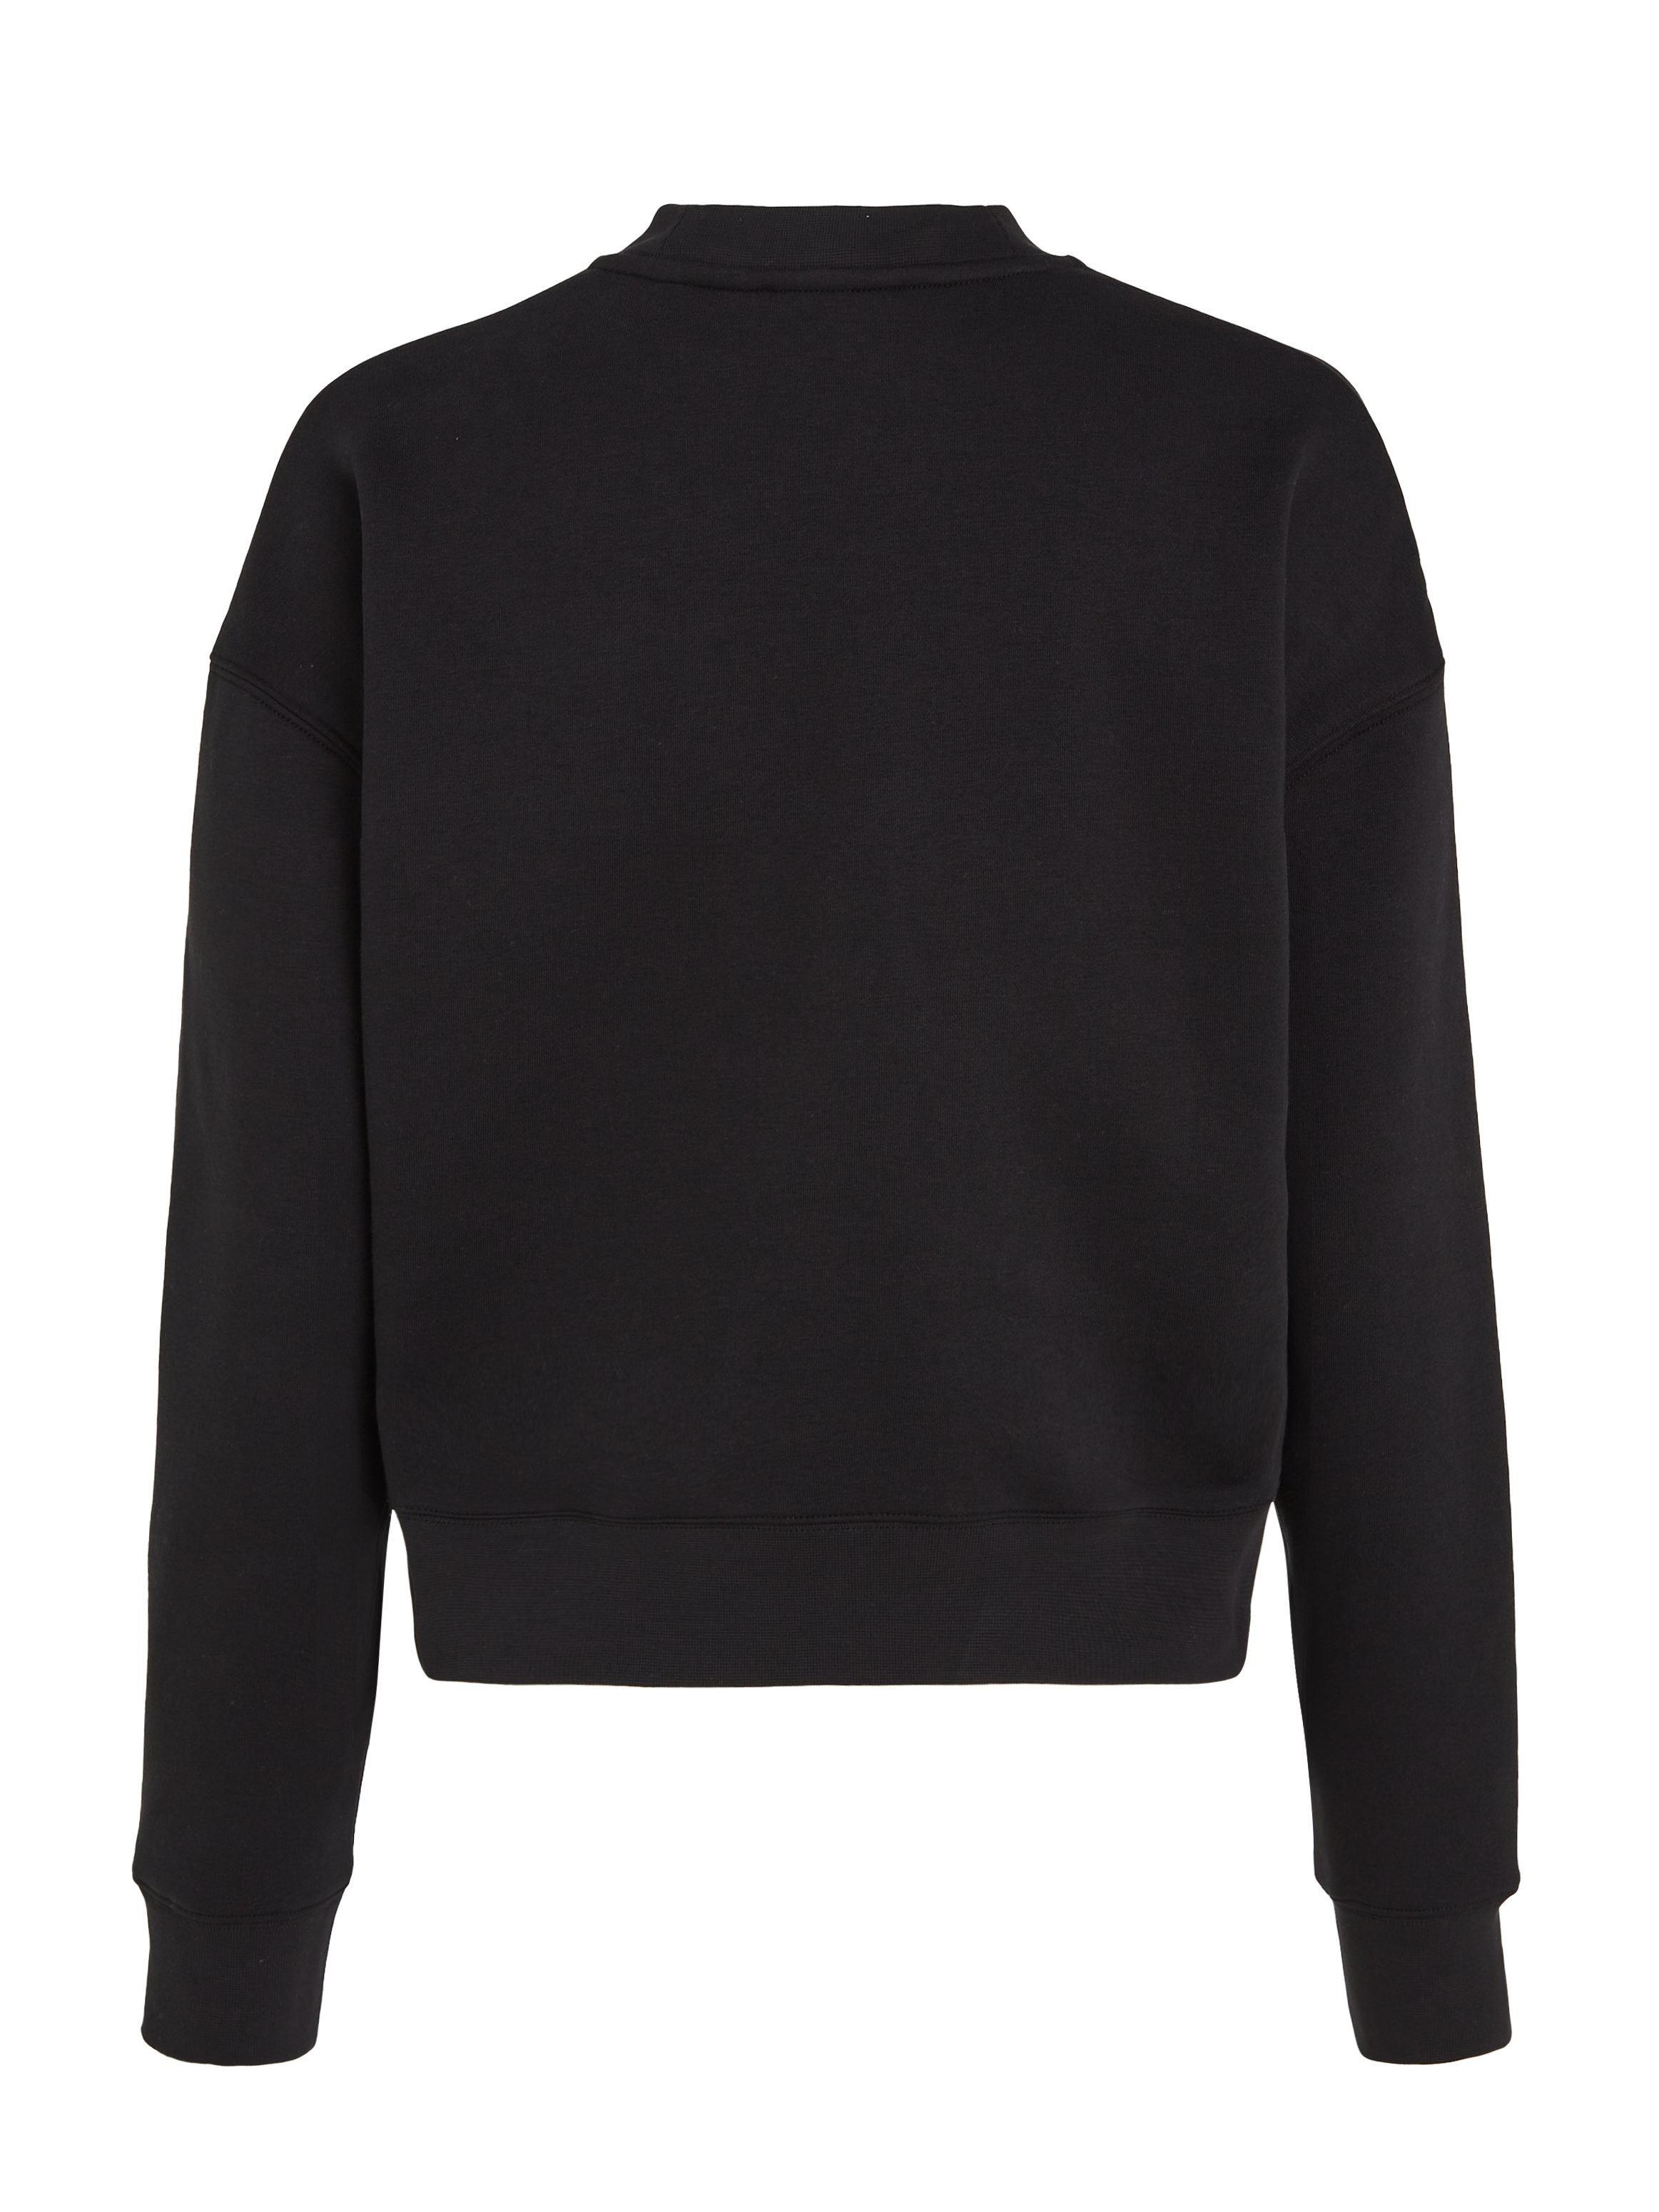 Calvin Klein Sweatshirt METALLIC MICRO LOGO Ck Black SWEATSHIRT